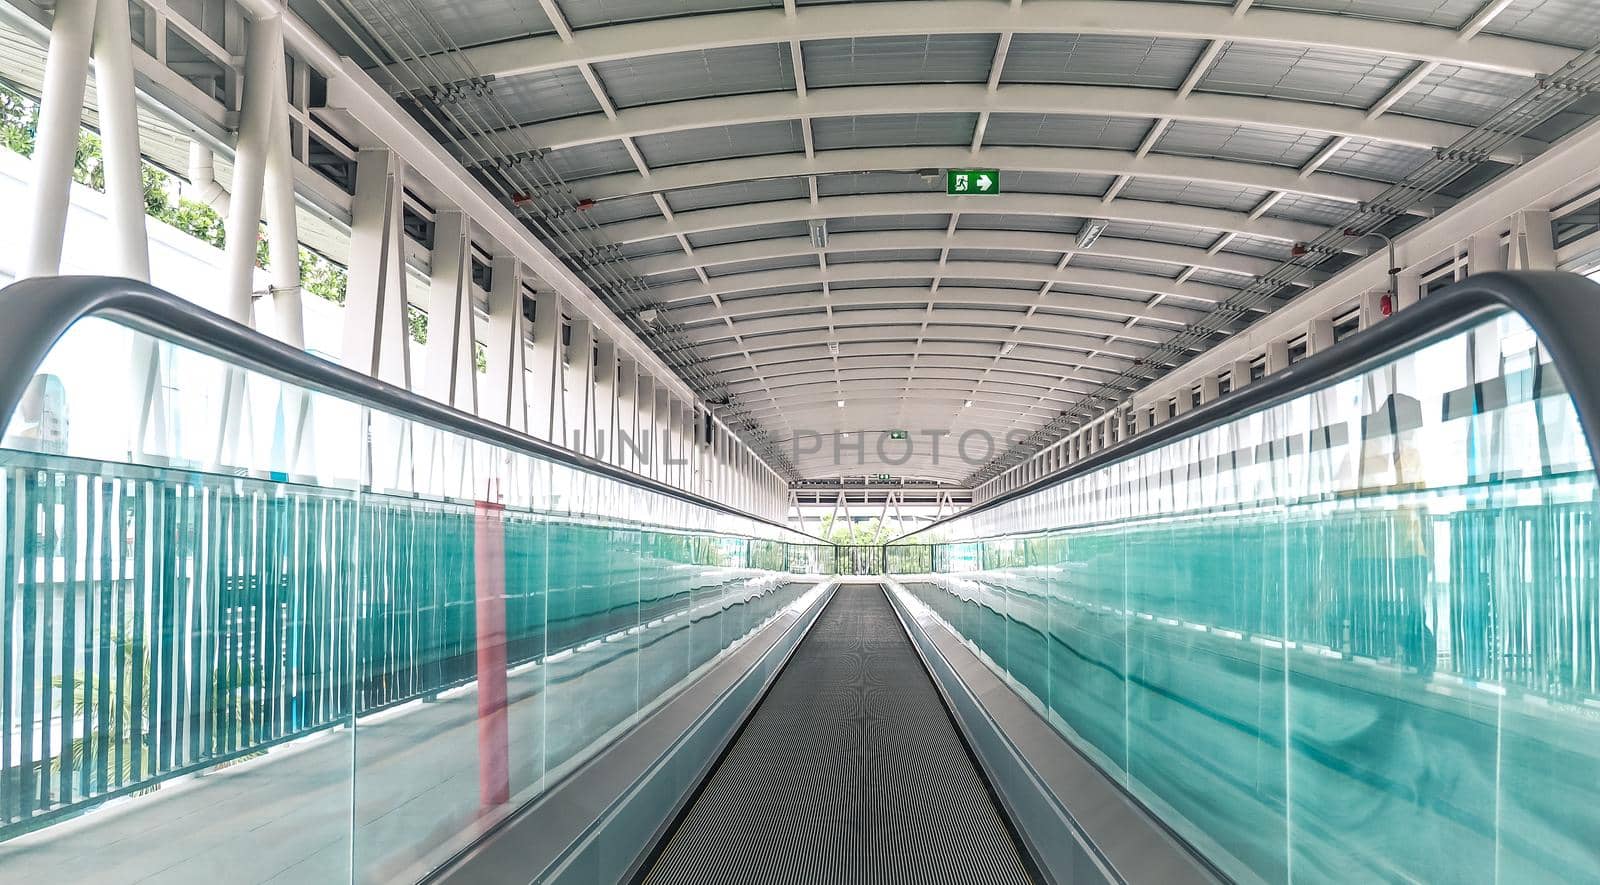 Modern walkway of escalator move forward and escalator move backward in international airport. Escalator is facility for support transportation